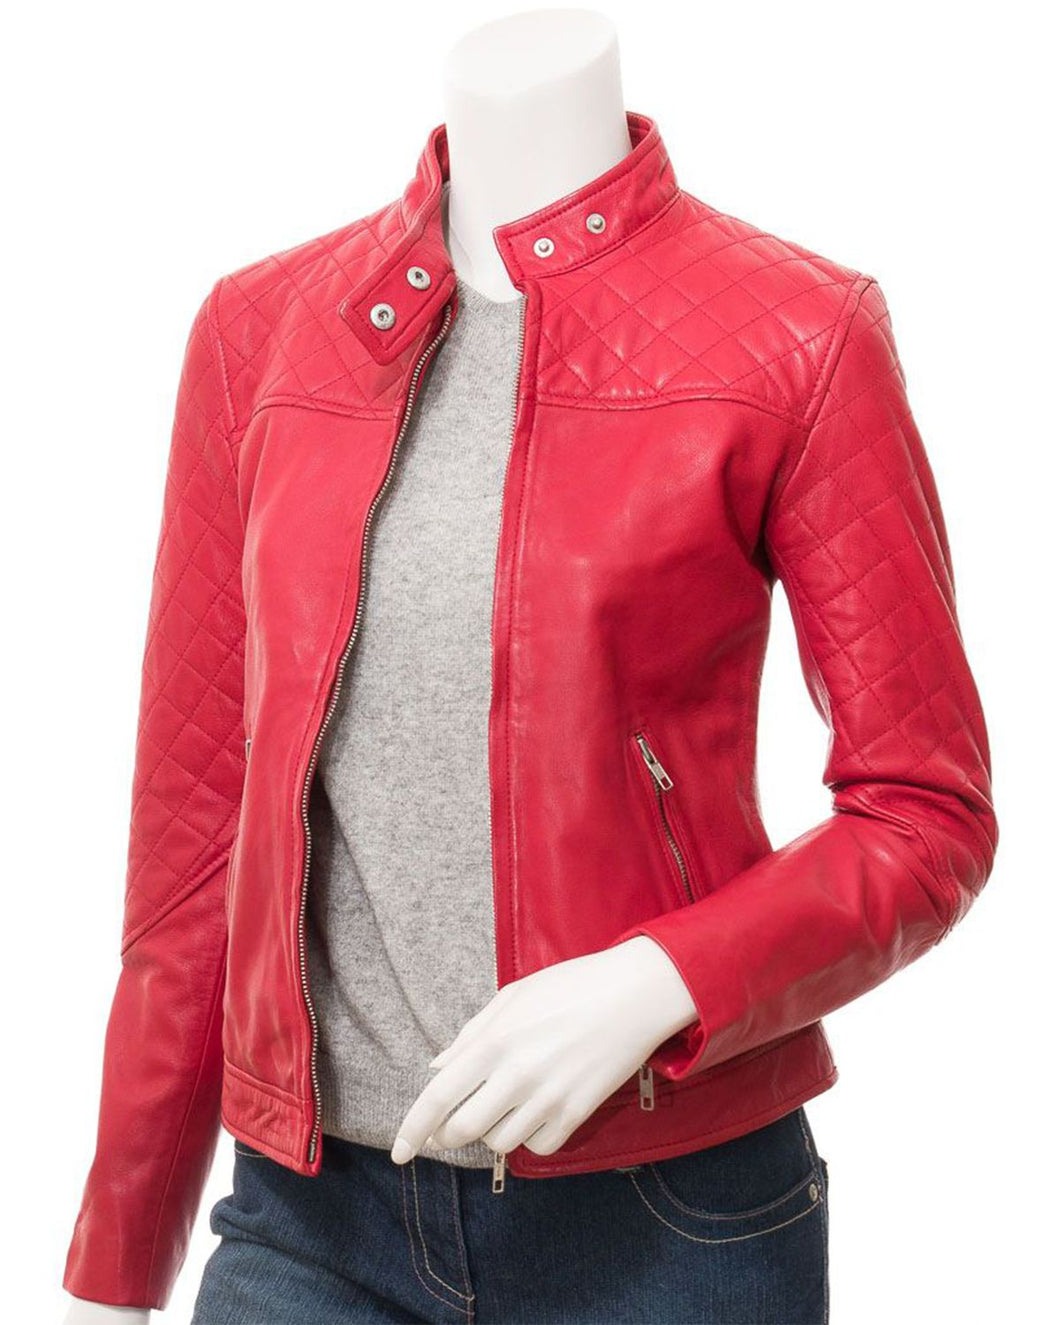 Women's Pink Stylish Biker Cafe Racer Leather Jacket